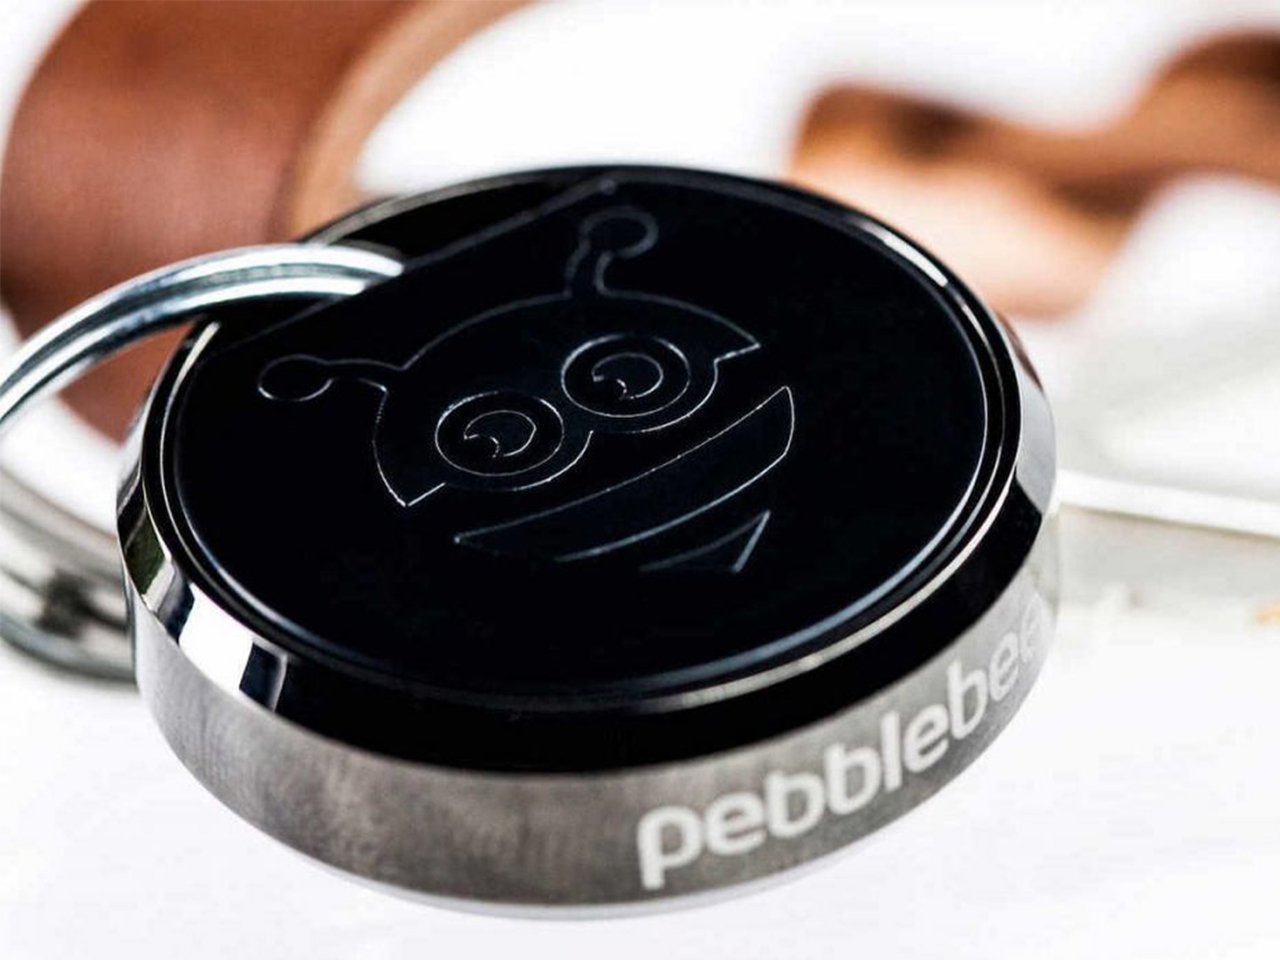 Pebblebee Bluetooth Tracker two-pack